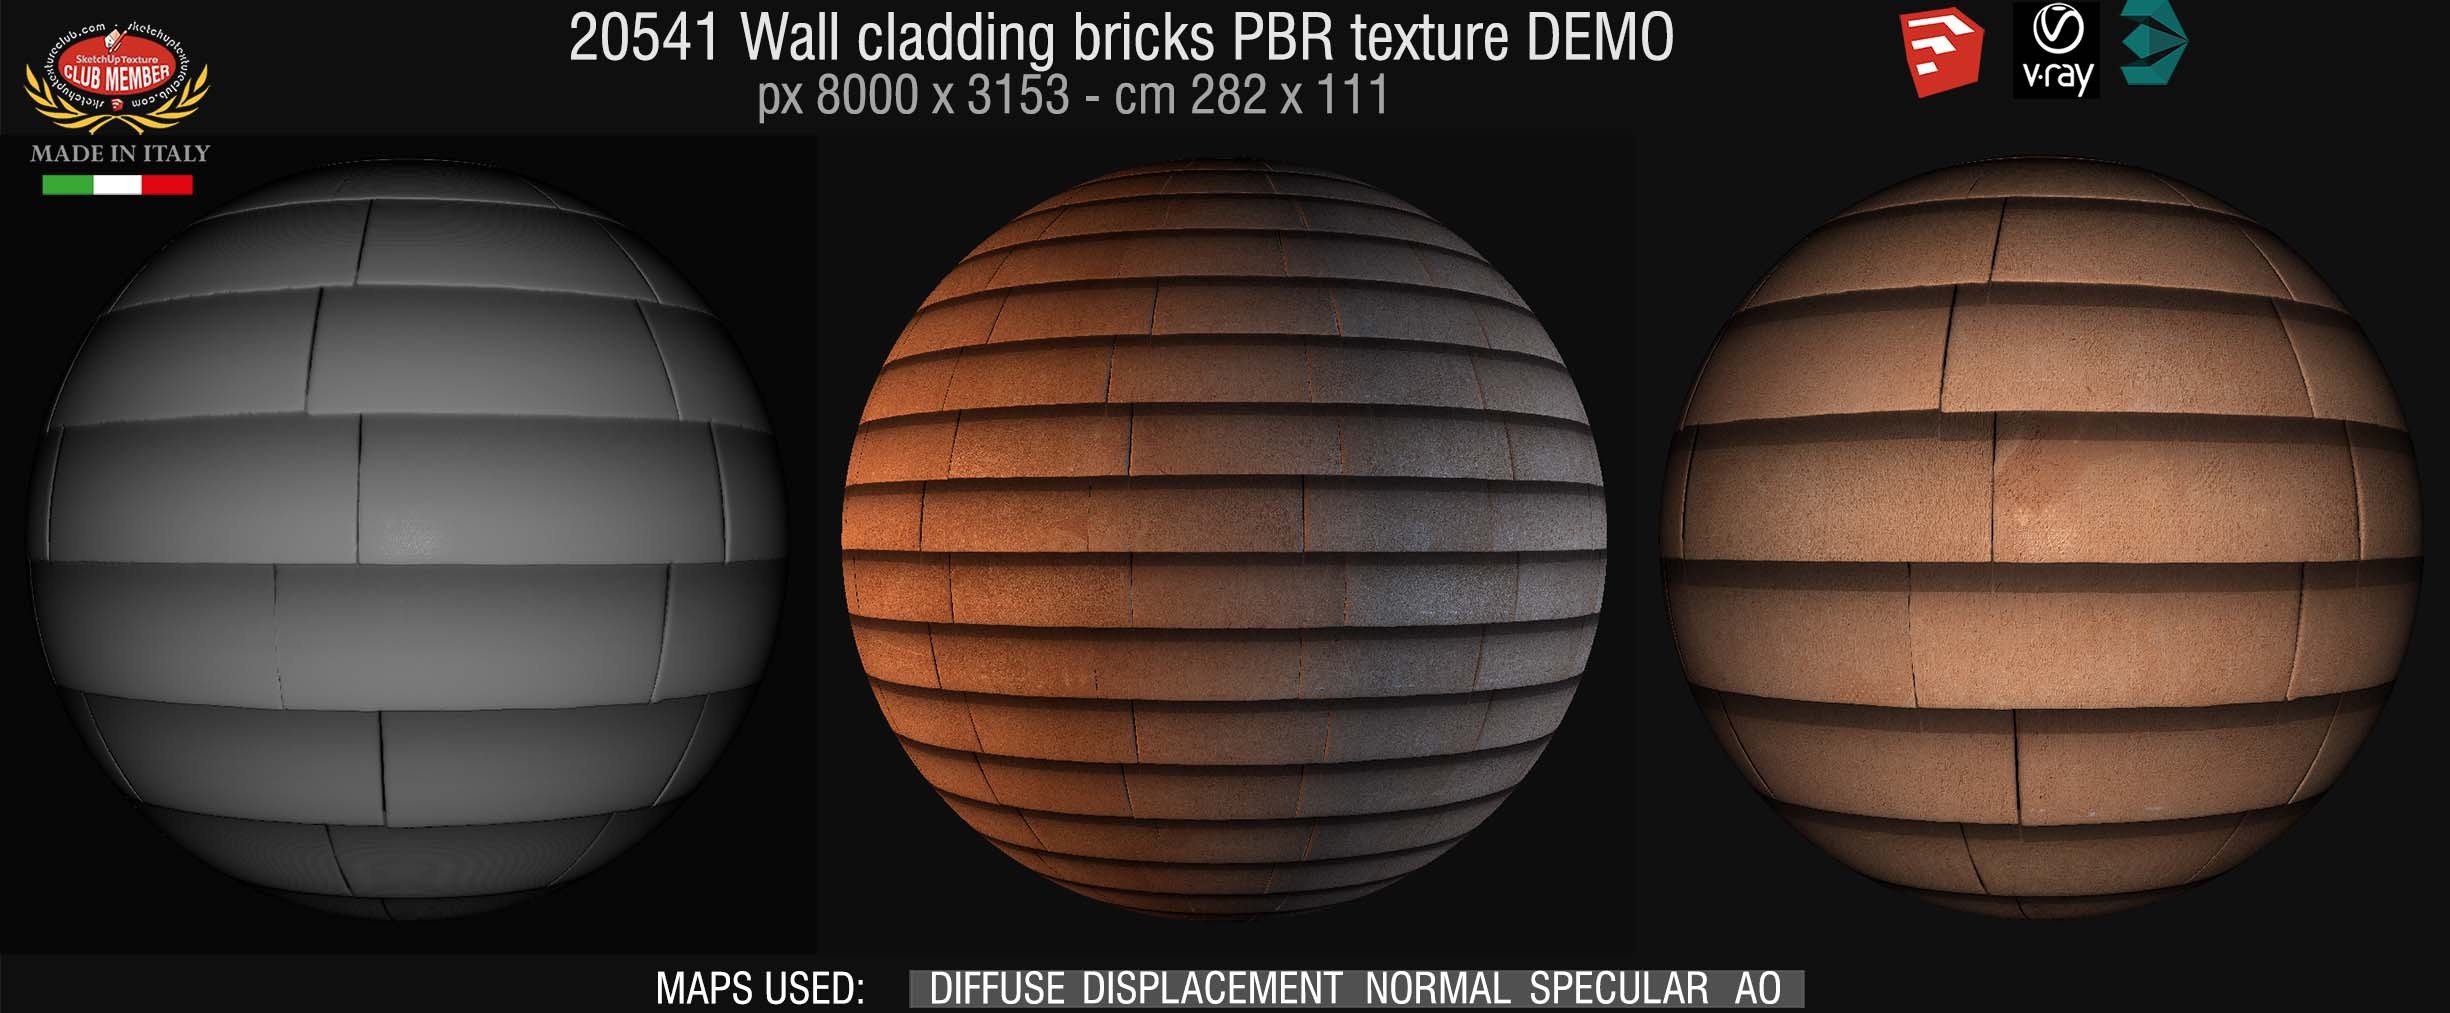 21541 Wall cladding bricks PBR texture seamless DEMO